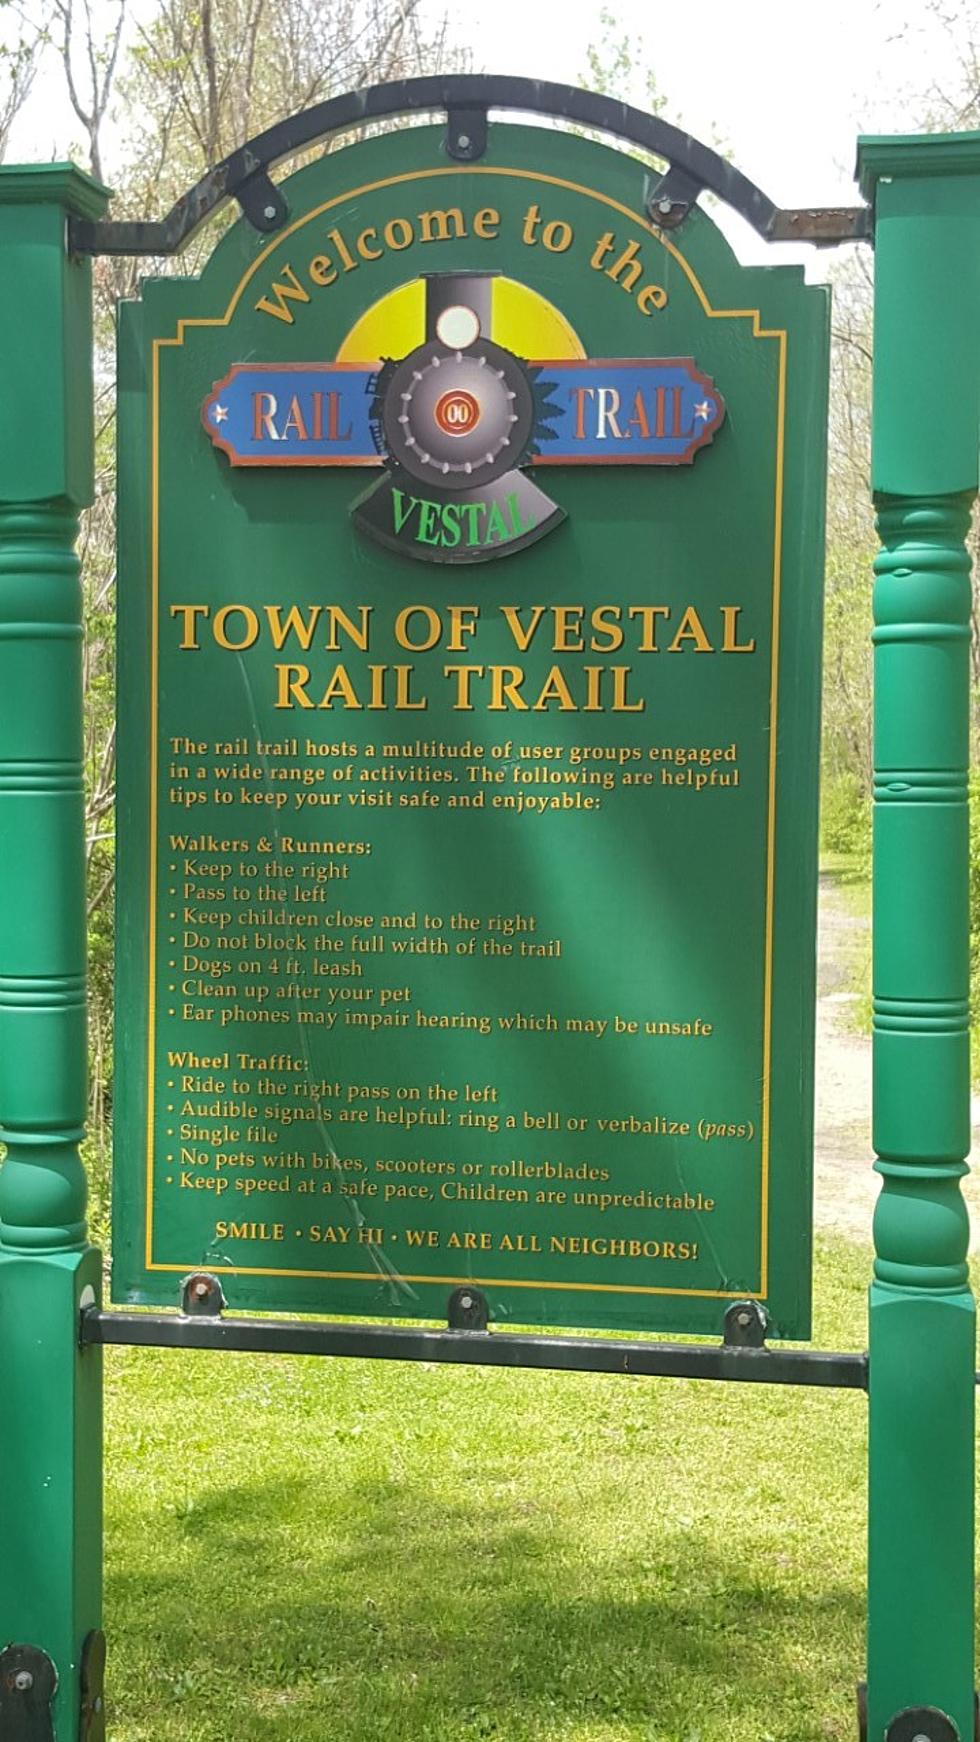 Matthews Walk-A-Thon This Weekend at Vestal Rail Trail